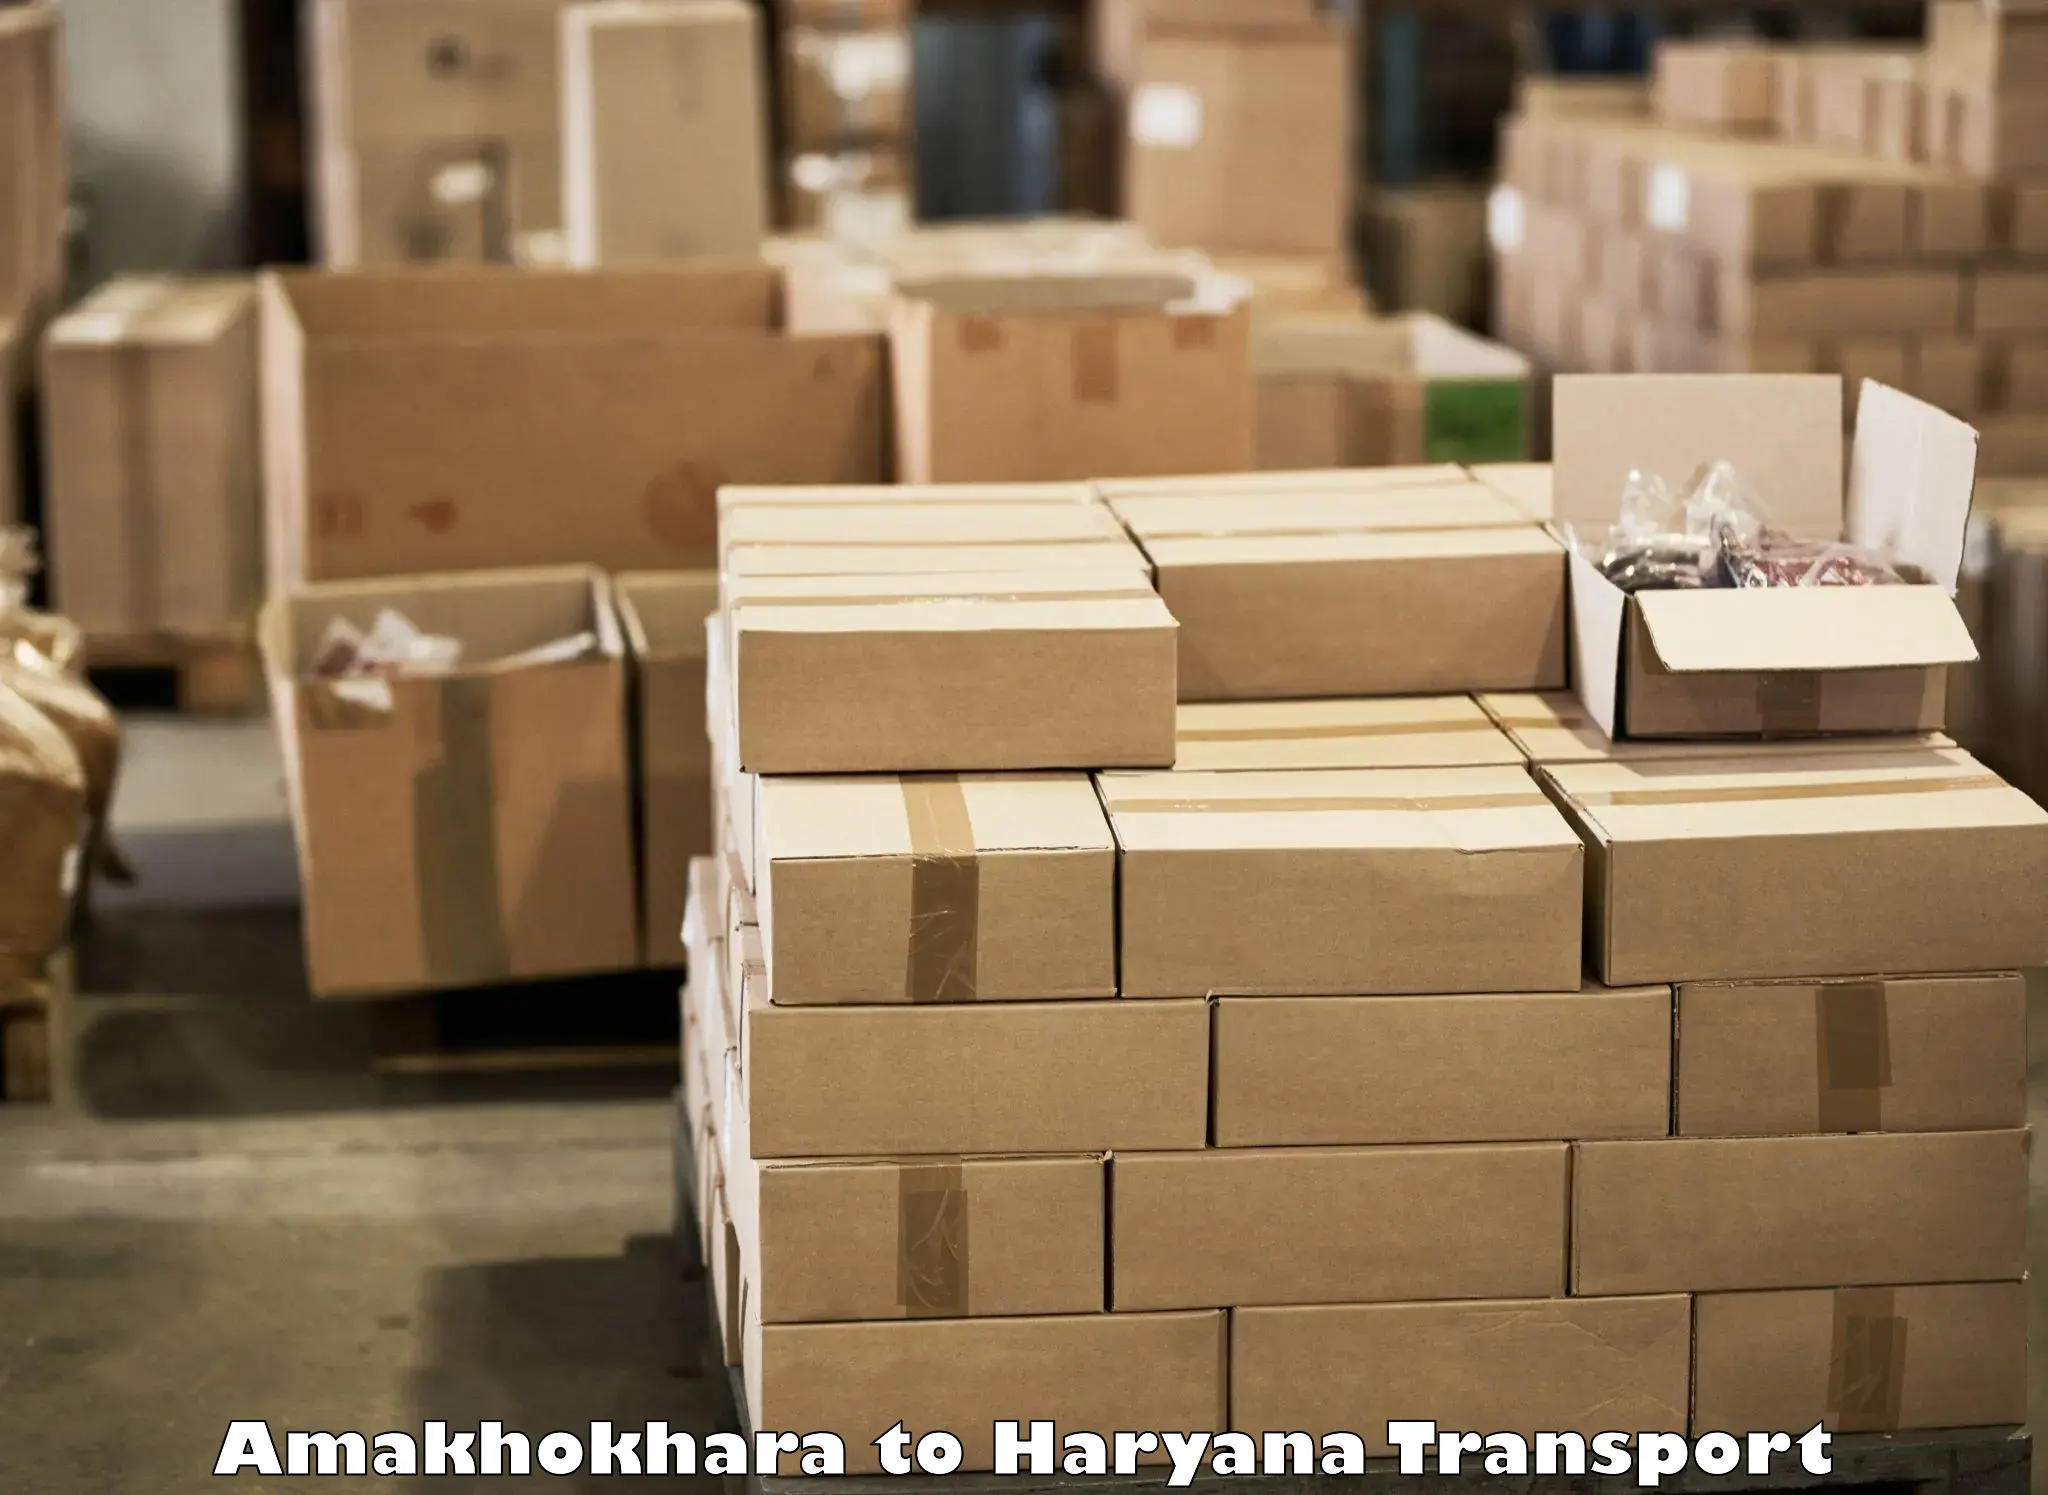 Goods delivery service Amakhokhara to Faridabad